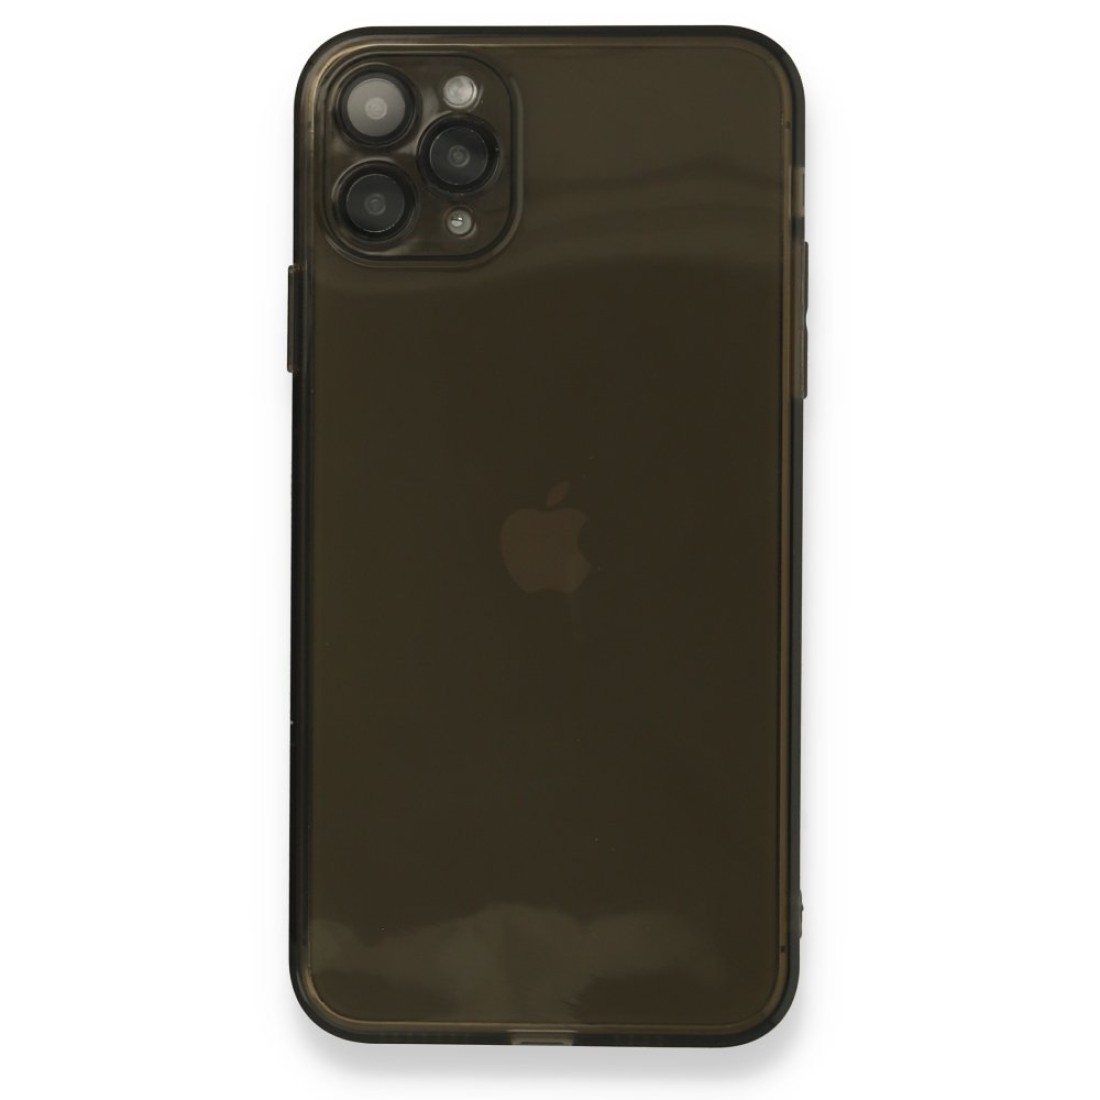 Apple iPhone 11 Pro Max Kılıf Fly Lens Silikon - Siyah